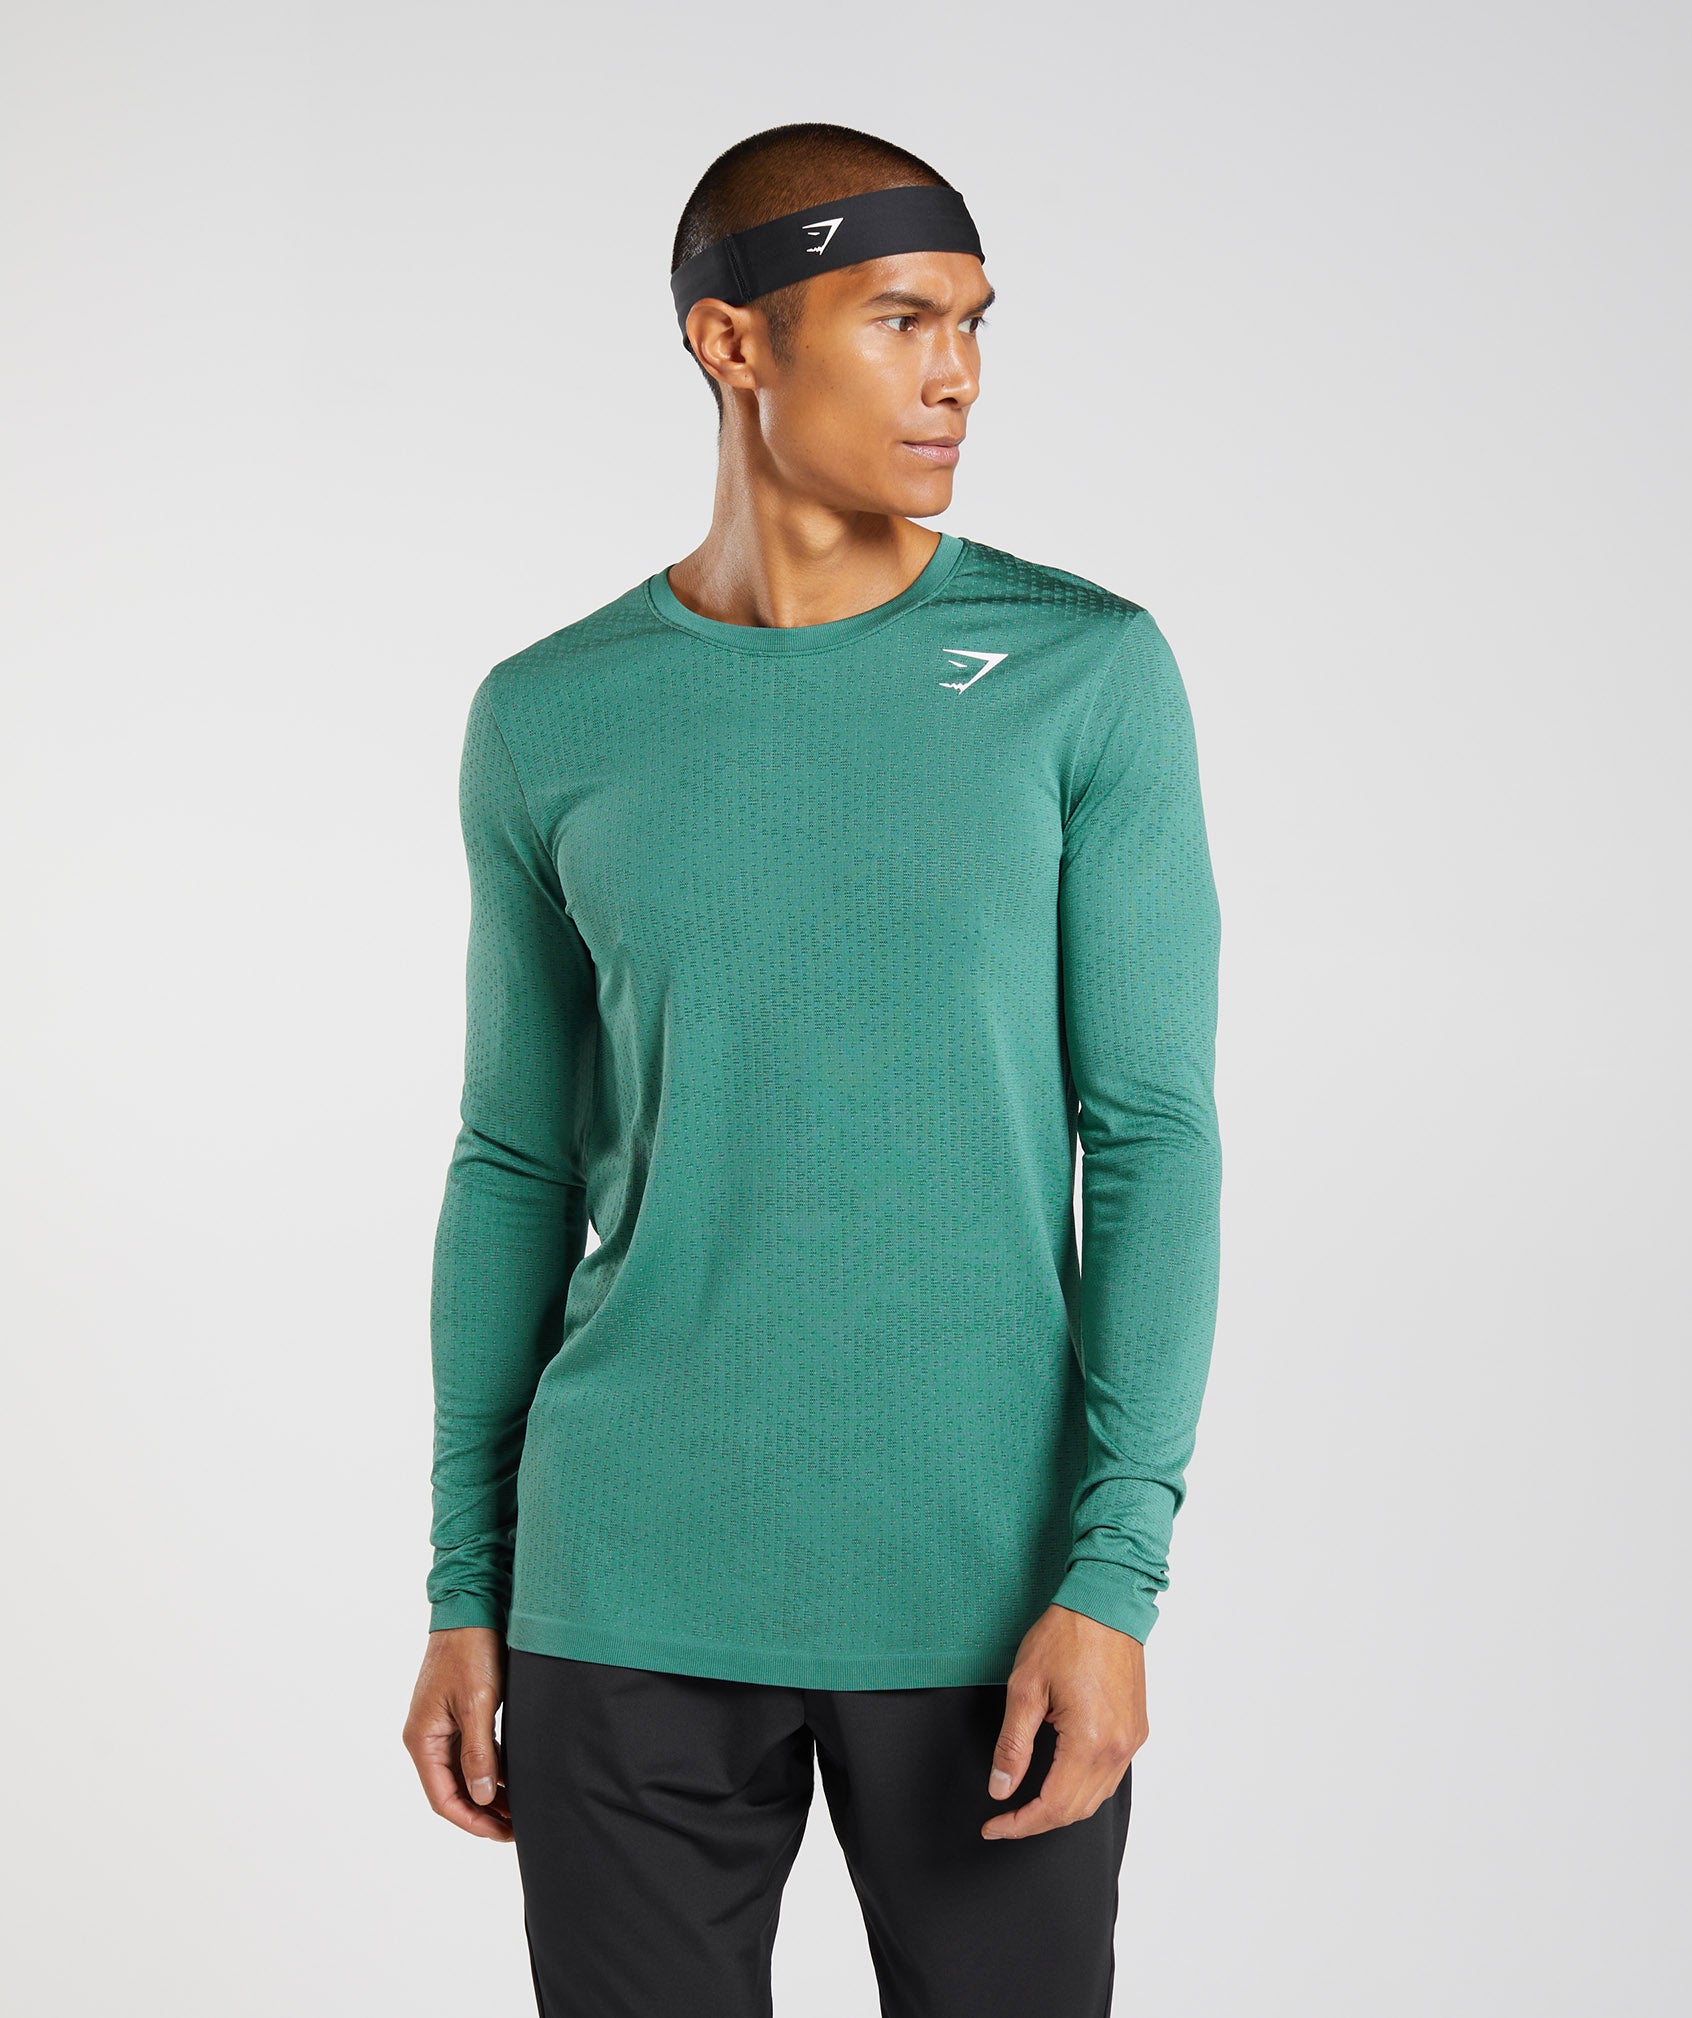 Gymshark Apex Long Sleeve T-Shirt - Woodland Green/Hoya Green